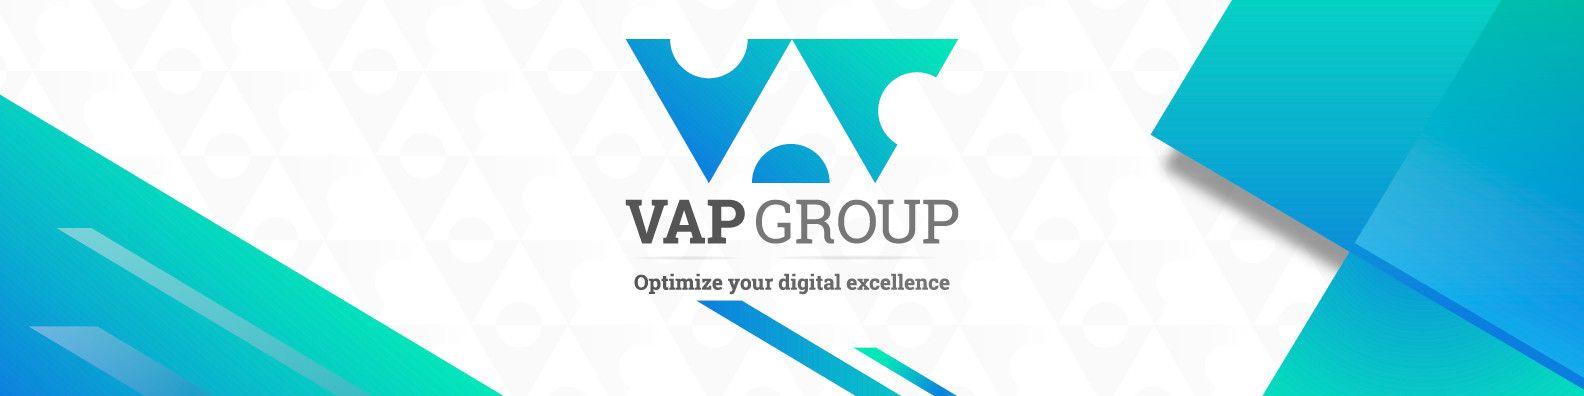 VAP Logo - VAP Group | LinkedIn